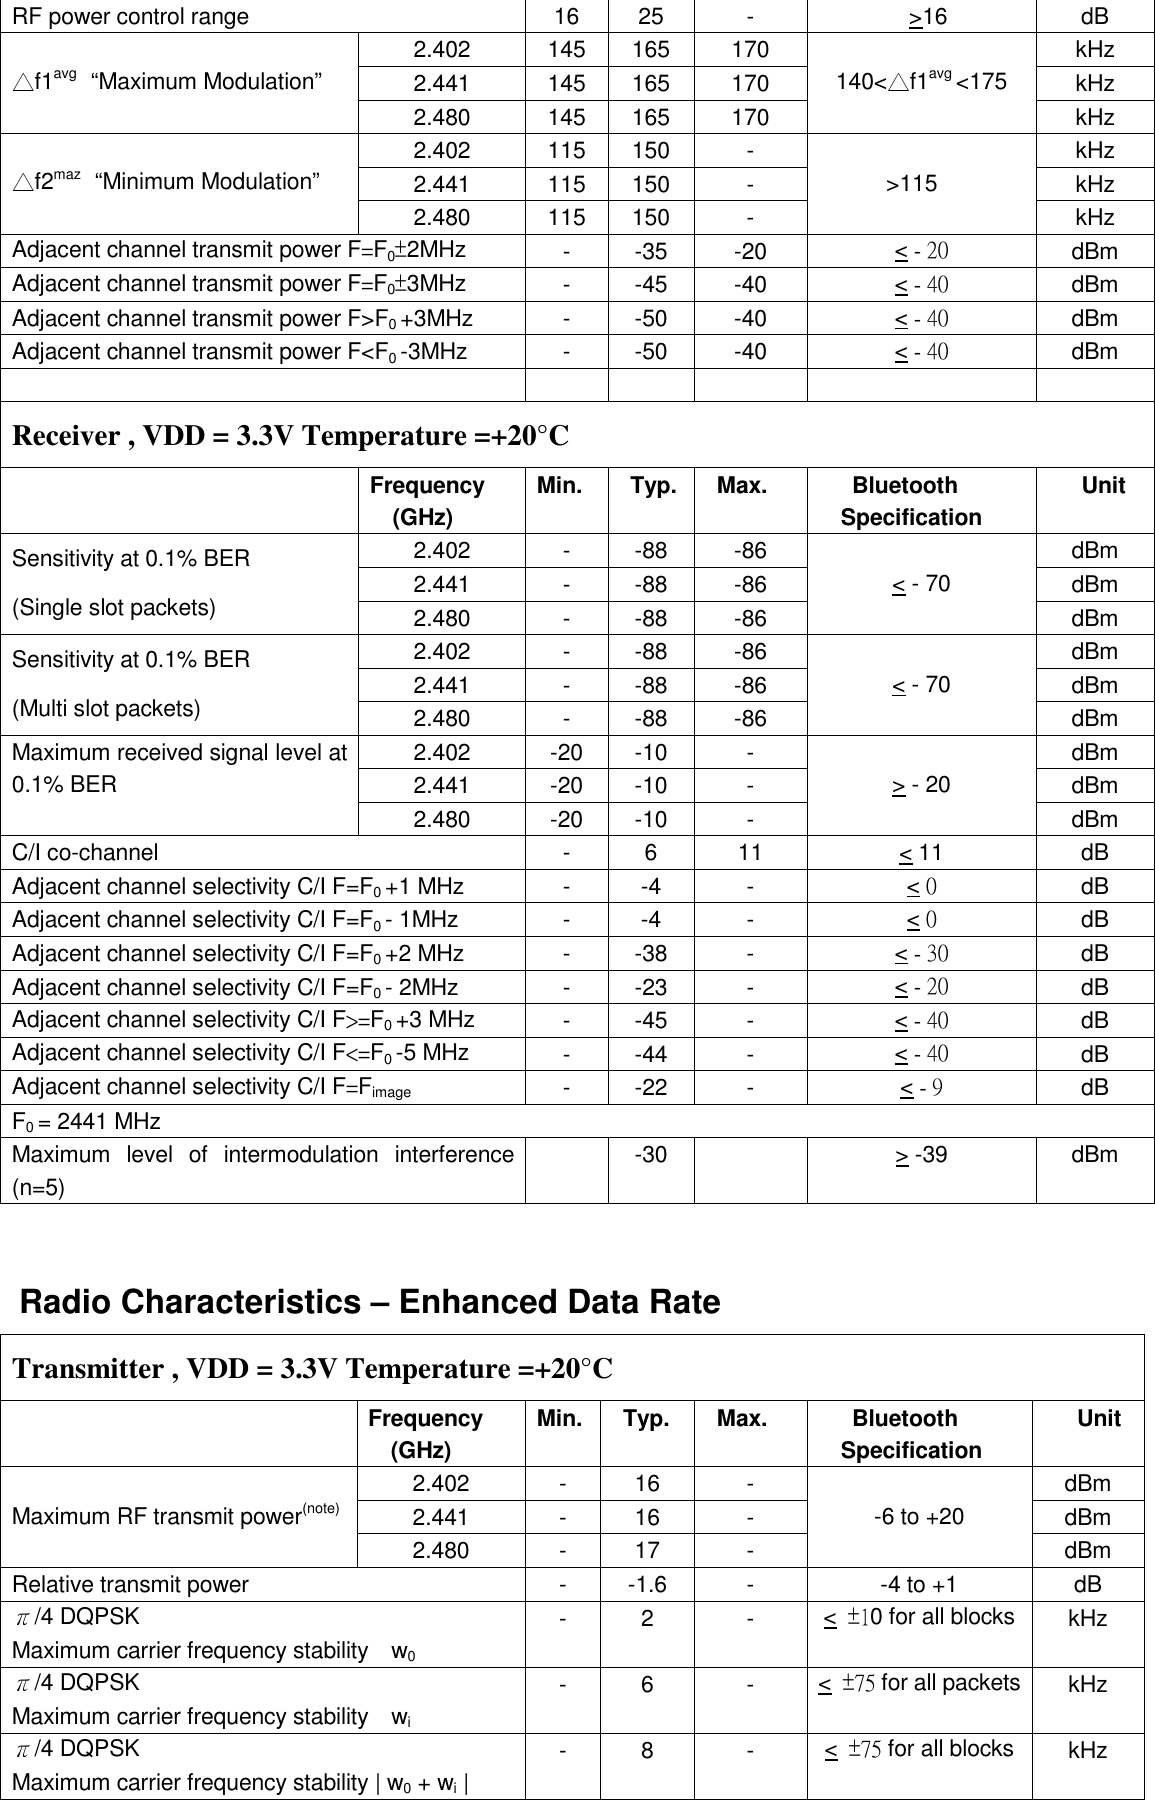 RF power control range  16  25  -  &gt;16  dB 2.402  145  165  170  kHz 2.441  145  165  170  kHz  △f1avg   “Maximum Modulation” 2.480  145  165  170  140&lt;△f1avg &lt;175 kHz 2.402  115  150  -  kHz 2.441  115  150  -  kHz  △f2maz   “Minimum Modulation” 2.480  115  150  -  &gt;115 kHz Adjacent channel transmit power F=F0±2MHz -  -35  -20  &lt; - 20 dBm Adjacent channel transmit power F=F0±3MHz -  -45  -40  &lt; - 40 dBm Adjacent channel transmit power F&gt;F0 +3MHz -  -50  -40  &lt; - 40 dBm Adjacent channel transmit power F&lt;F0 -3MHz -  -50  -40  &lt; - 40 dBm           Receiver , VDD = 3.3V Temperature =+20°C   Frequency (GHz) Min.  Typ. Max.  Bluetooth Specification Unit 2.402  -  -88  -86  dBm 2.441  -  -88  -86  dBm Sensitivity at 0.1% BER (Single slot packets)  2.480  -  -88  -86  &lt; - 70 dBm 2.402  -  -88  -86  dBm 2.441  -  -88  -86  dBm Sensitivity at 0.1% BER (Multi slot packets)  2.480  -  -88  -86  &lt; - 70 dBm 2.402  -20  -10  -  dBm 2.441  -20  -10  -  dBm Maximum received signal level at 0.1% BER 2.480  -20  -10  -  &gt; - 20 dBm C/I co-channel  -  6  11  &lt; 11  dB Adjacent channel selectivity C/I F=F0 +1 MHz  -  -4  -  &lt; 0 dB Adjacent channel selectivity C/I F=F0 - 1MHz  -  -4  -  &lt; 0 dB Adjacent channel selectivity C/I F=F0 +2 MHz  -  -38  -  &lt; - 30 dB Adjacent channel selectivity C/I F=F0 - 2MHz  -  -23  -  &lt; - 20 dB Adjacent channel selectivity C/I F&gt;=F0 +3 MHz  -  -45  -  &lt; - 40 dB Adjacent channel selectivity C/I F&lt;=F0 -5 MHz  -  -44  -  &lt; - 40 dB Adjacent channel selectivity C/I F=Fimage -  -22  -  &lt; - 9 dB F0 = 2441 MHz Maximum  level  of  intermodulation  interference (n=5)   -30    &gt; -39 dBm   Radio Characteristics – Enhanced Data Rate Transmitter , VDD = 3.3V Temperature =+20°C   Frequency (GHz) Min. Typ.  Max.  Bluetooth Specification Unit 2.402  -  16  -  dBm 2.441  -  16  -  dBm  Maximum RF transmit power(note) 2.480  -  17  -  -6 to +20 dBm Relative transmit power  -  -1.6  -  -4 to +1  dB π/4 DQPSK Maximum carrier frequency stability    w0 -  2  -  &lt;  ±10 for all blocks kHz π/4 DQPSK Maximum carrier frequency stability    wi -  6  -  &lt;  ±75 for all packets kHz π/4 DQPSK Maximum carrier frequency stability | w0 + wi | -  8  -  &lt;  ±75 for all blocks kHz 